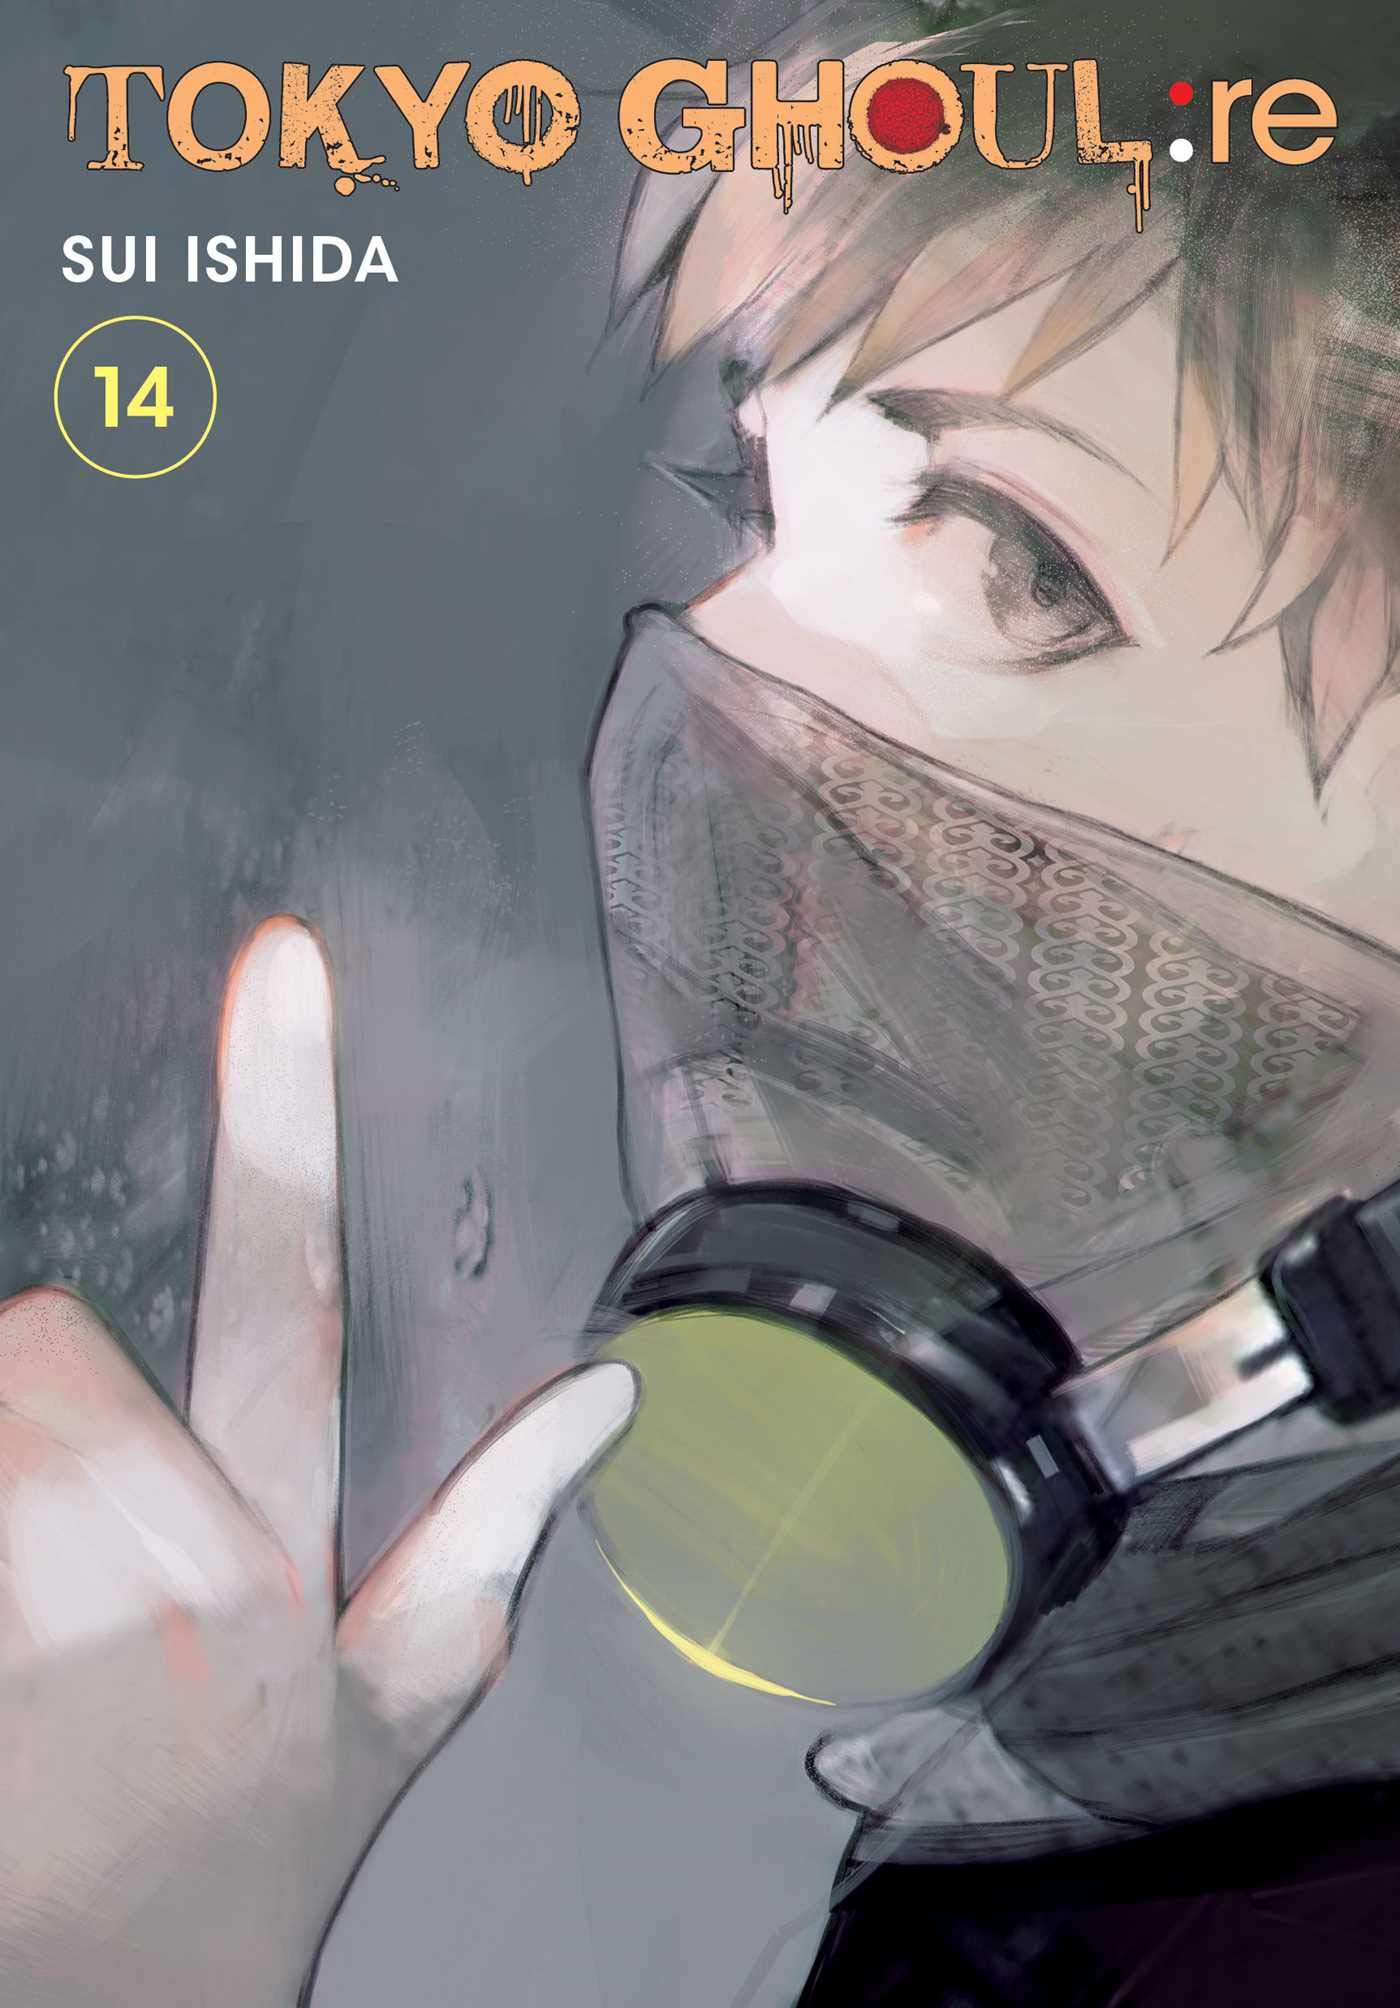 Tokyo Ghoul: re, Vol. 14 | Sui Ishida